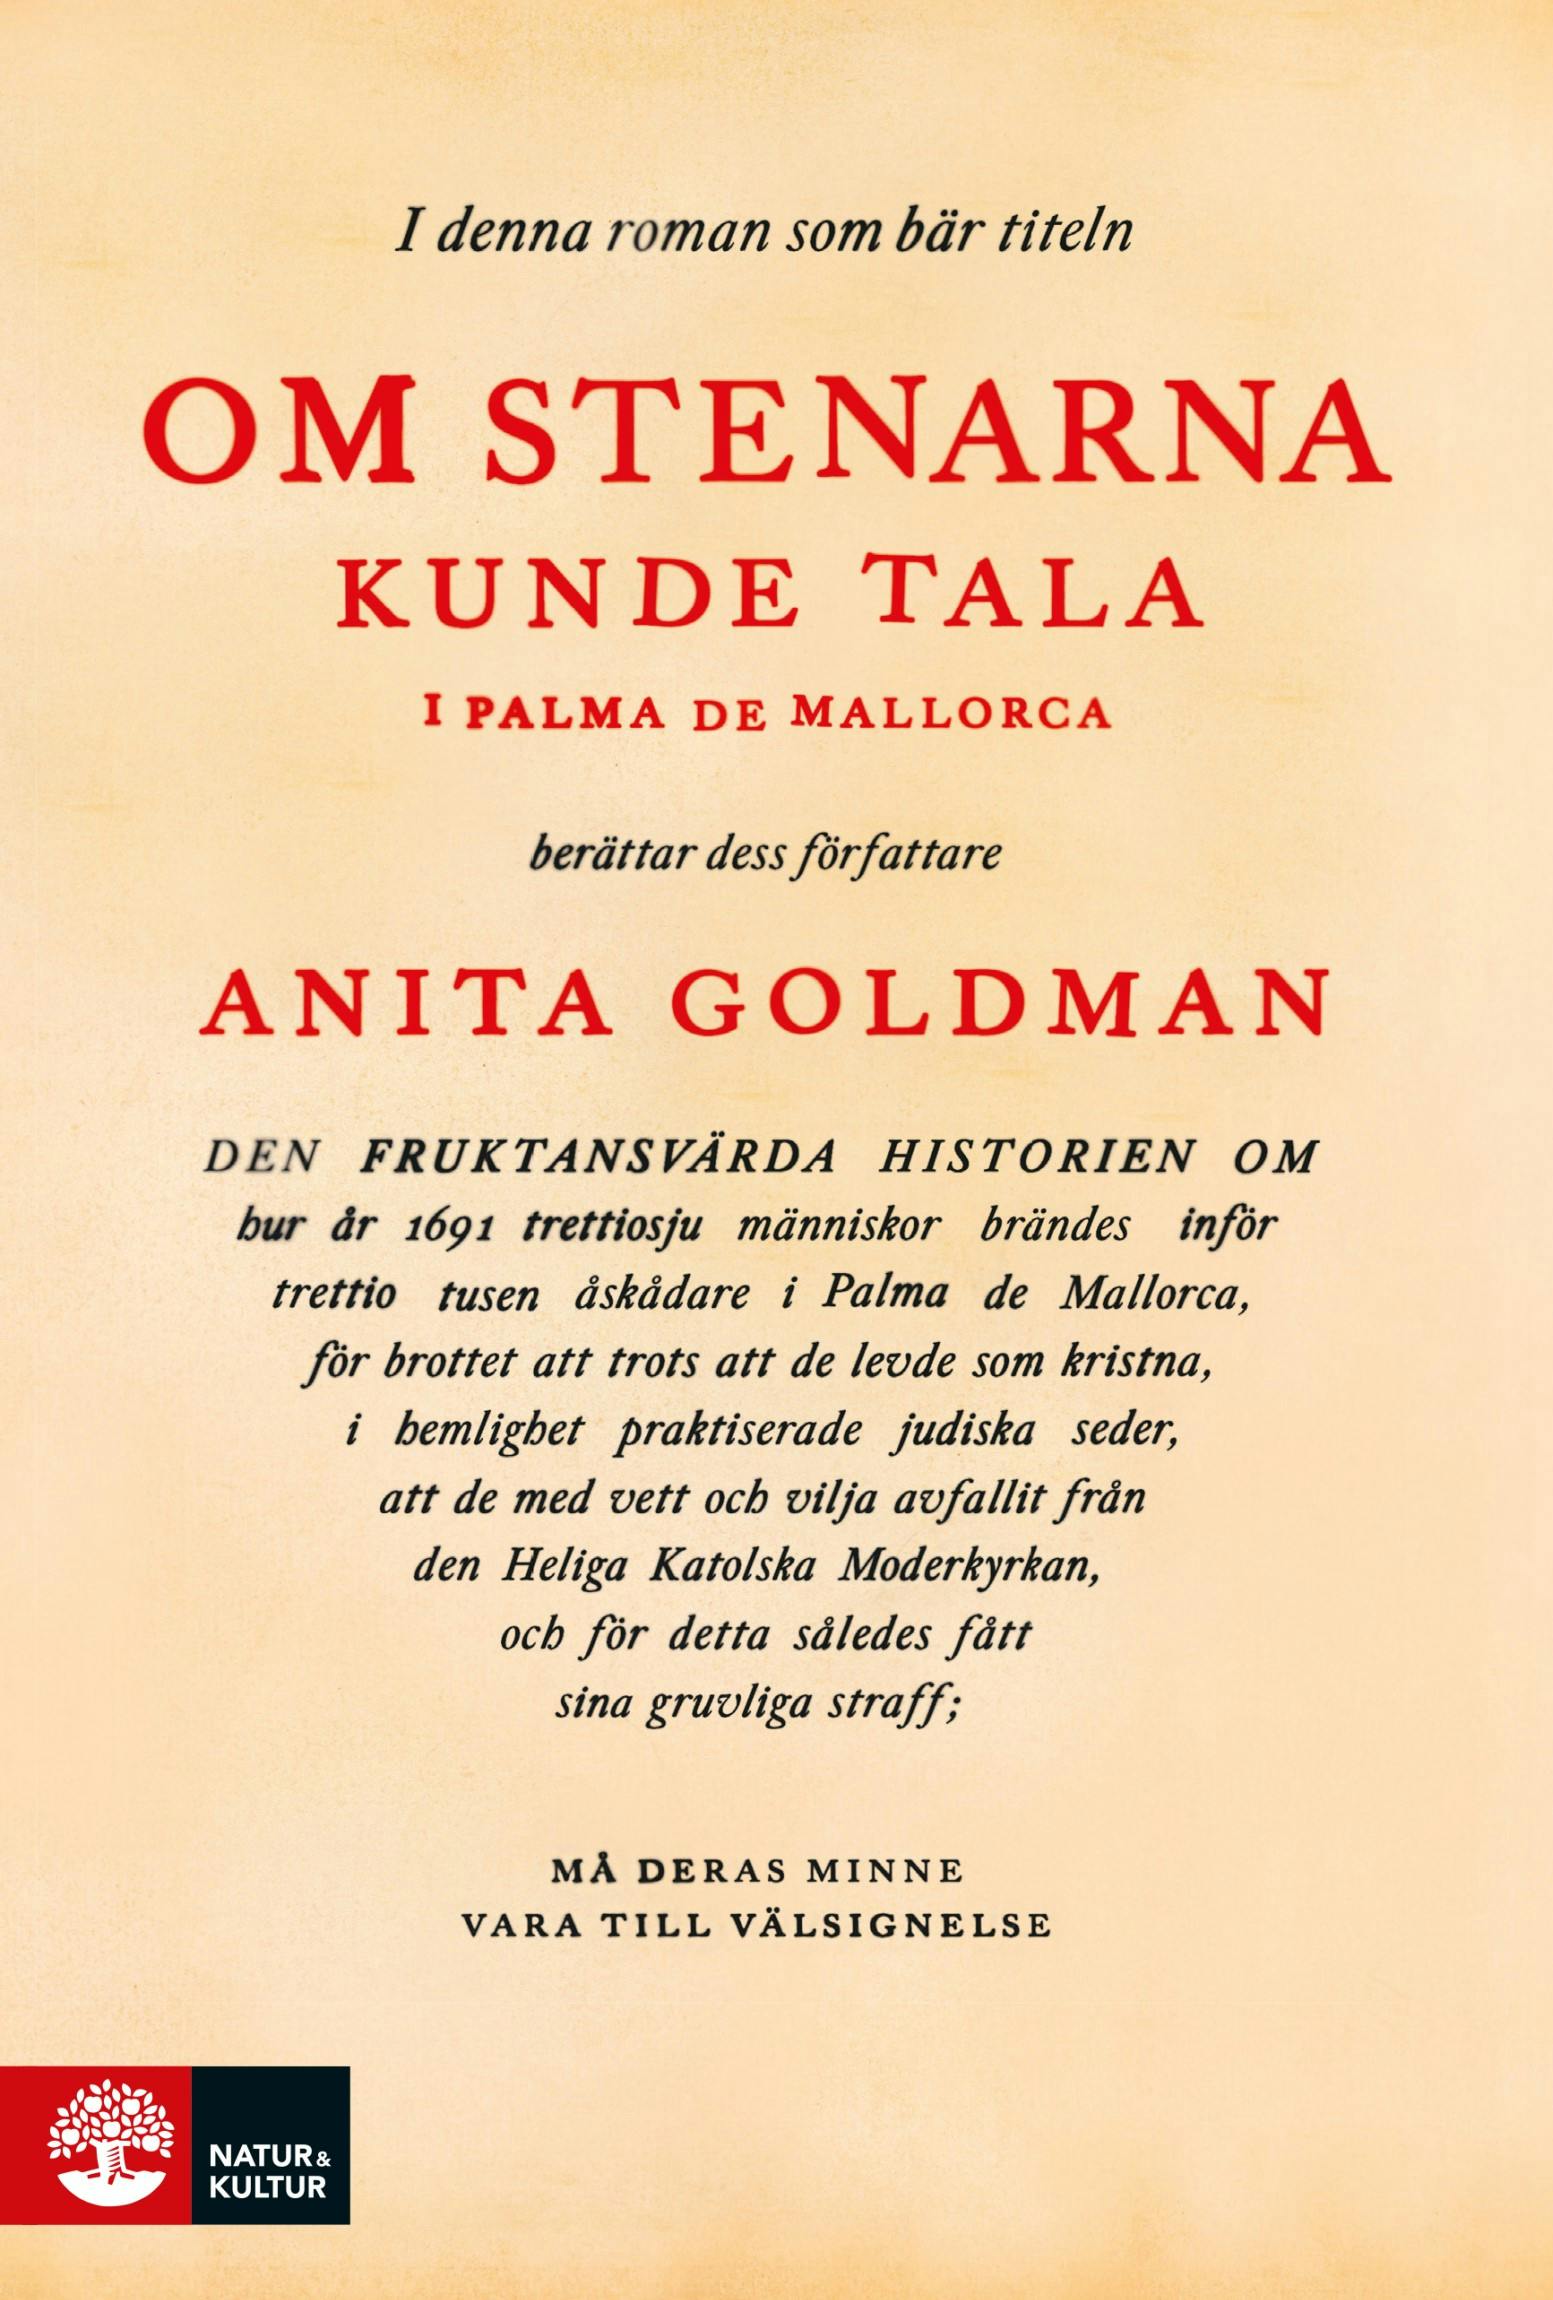 Om stenarna kunde tala i Palma de Mallorca - Anita Goldman